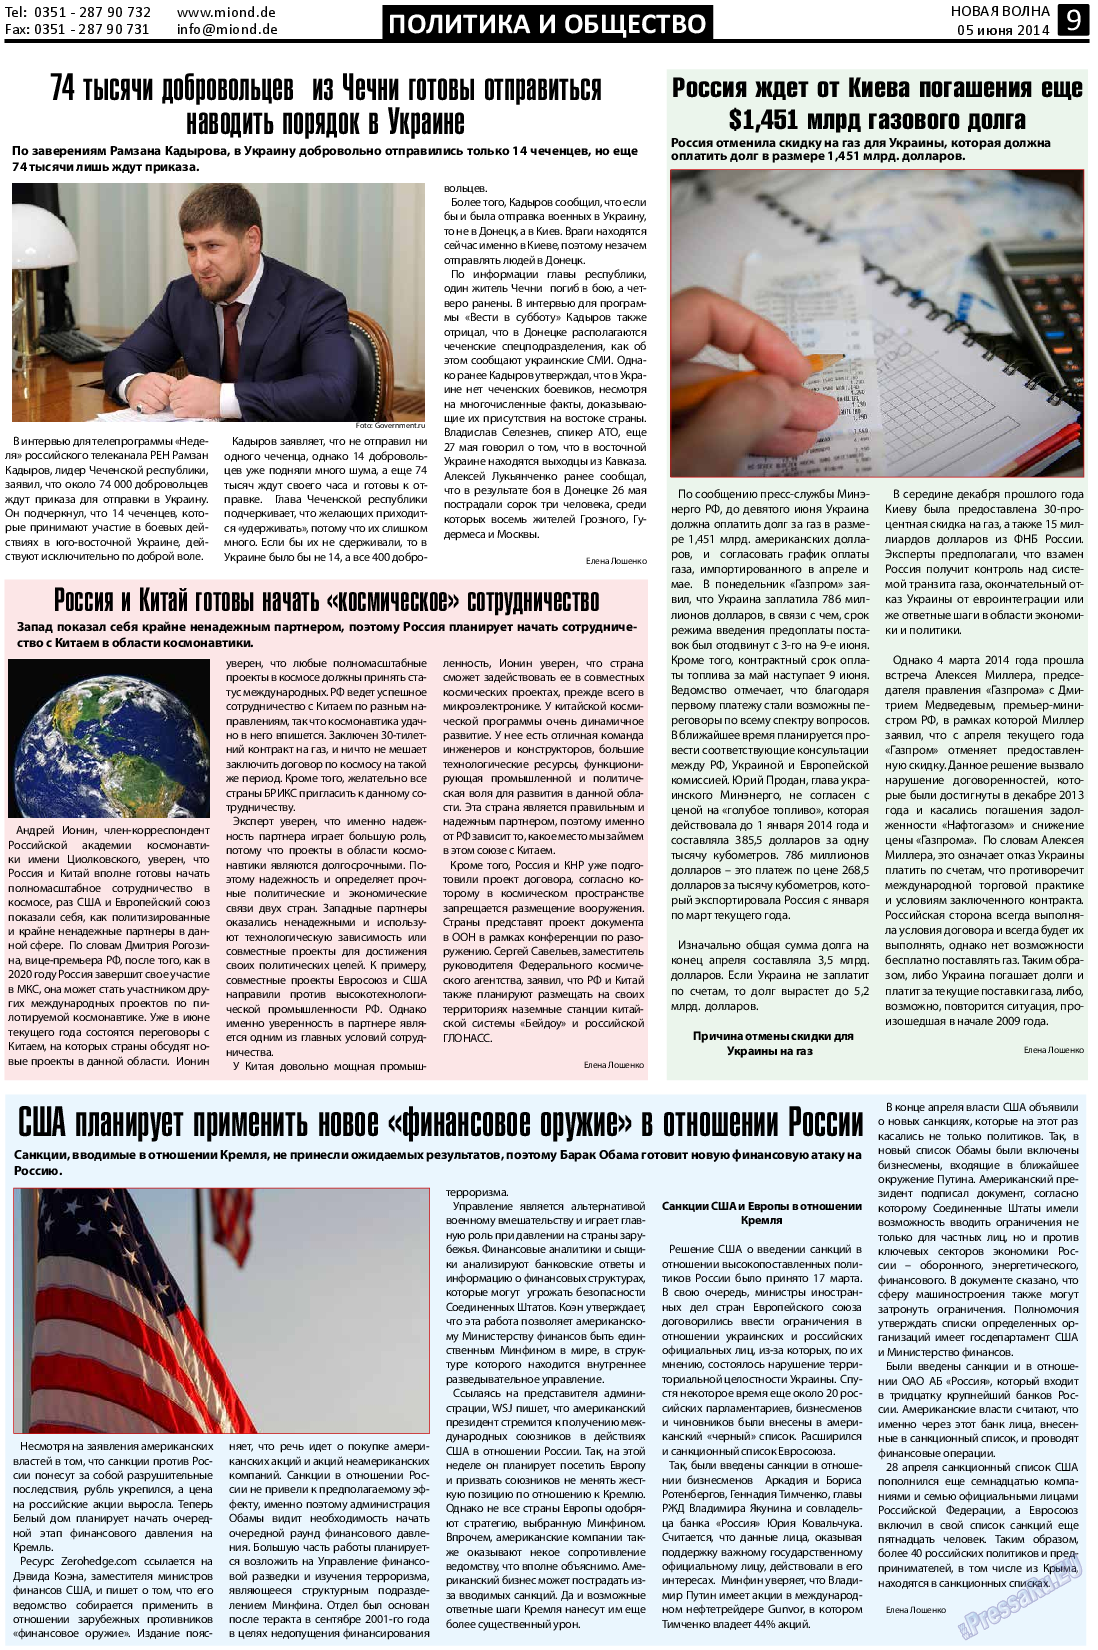 Новая Wолна, газета. 2014 №23 стр.9